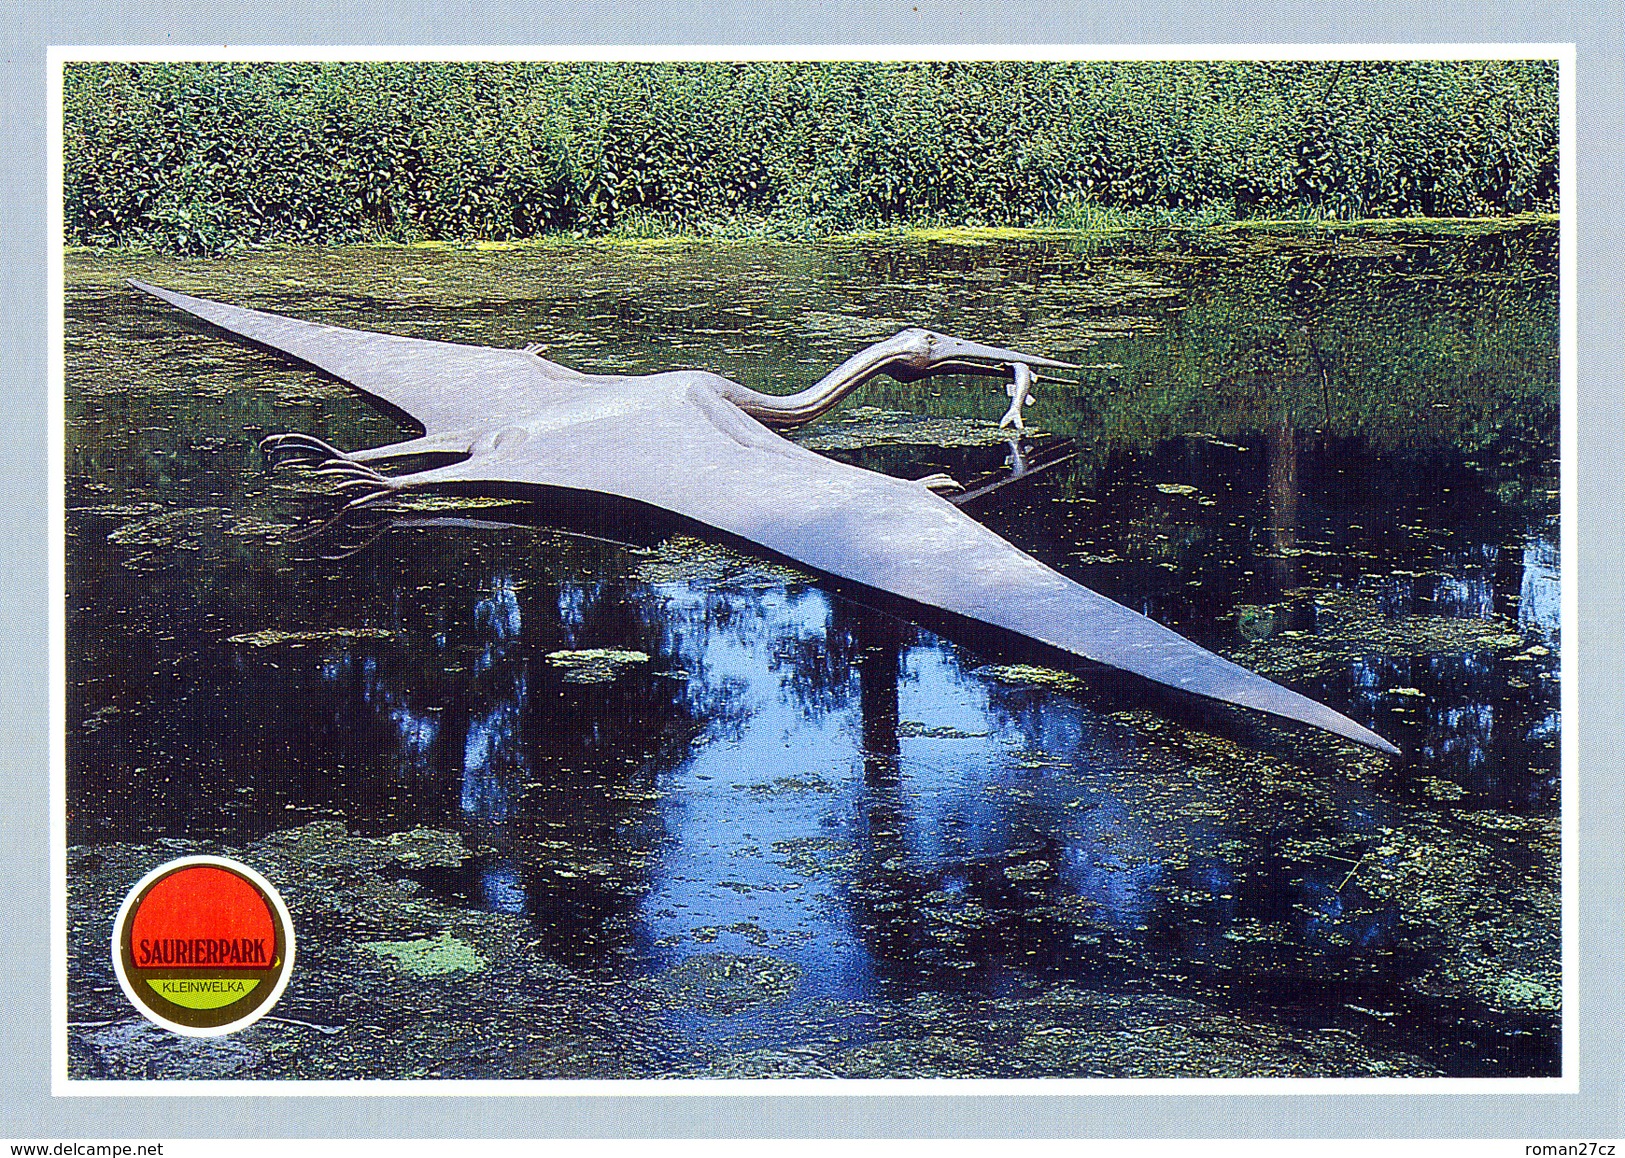 Saurierpark Kleinwelka, Germany, Ca. 1980s, Dinosaur - Quetzalcoatlus - Bautzen